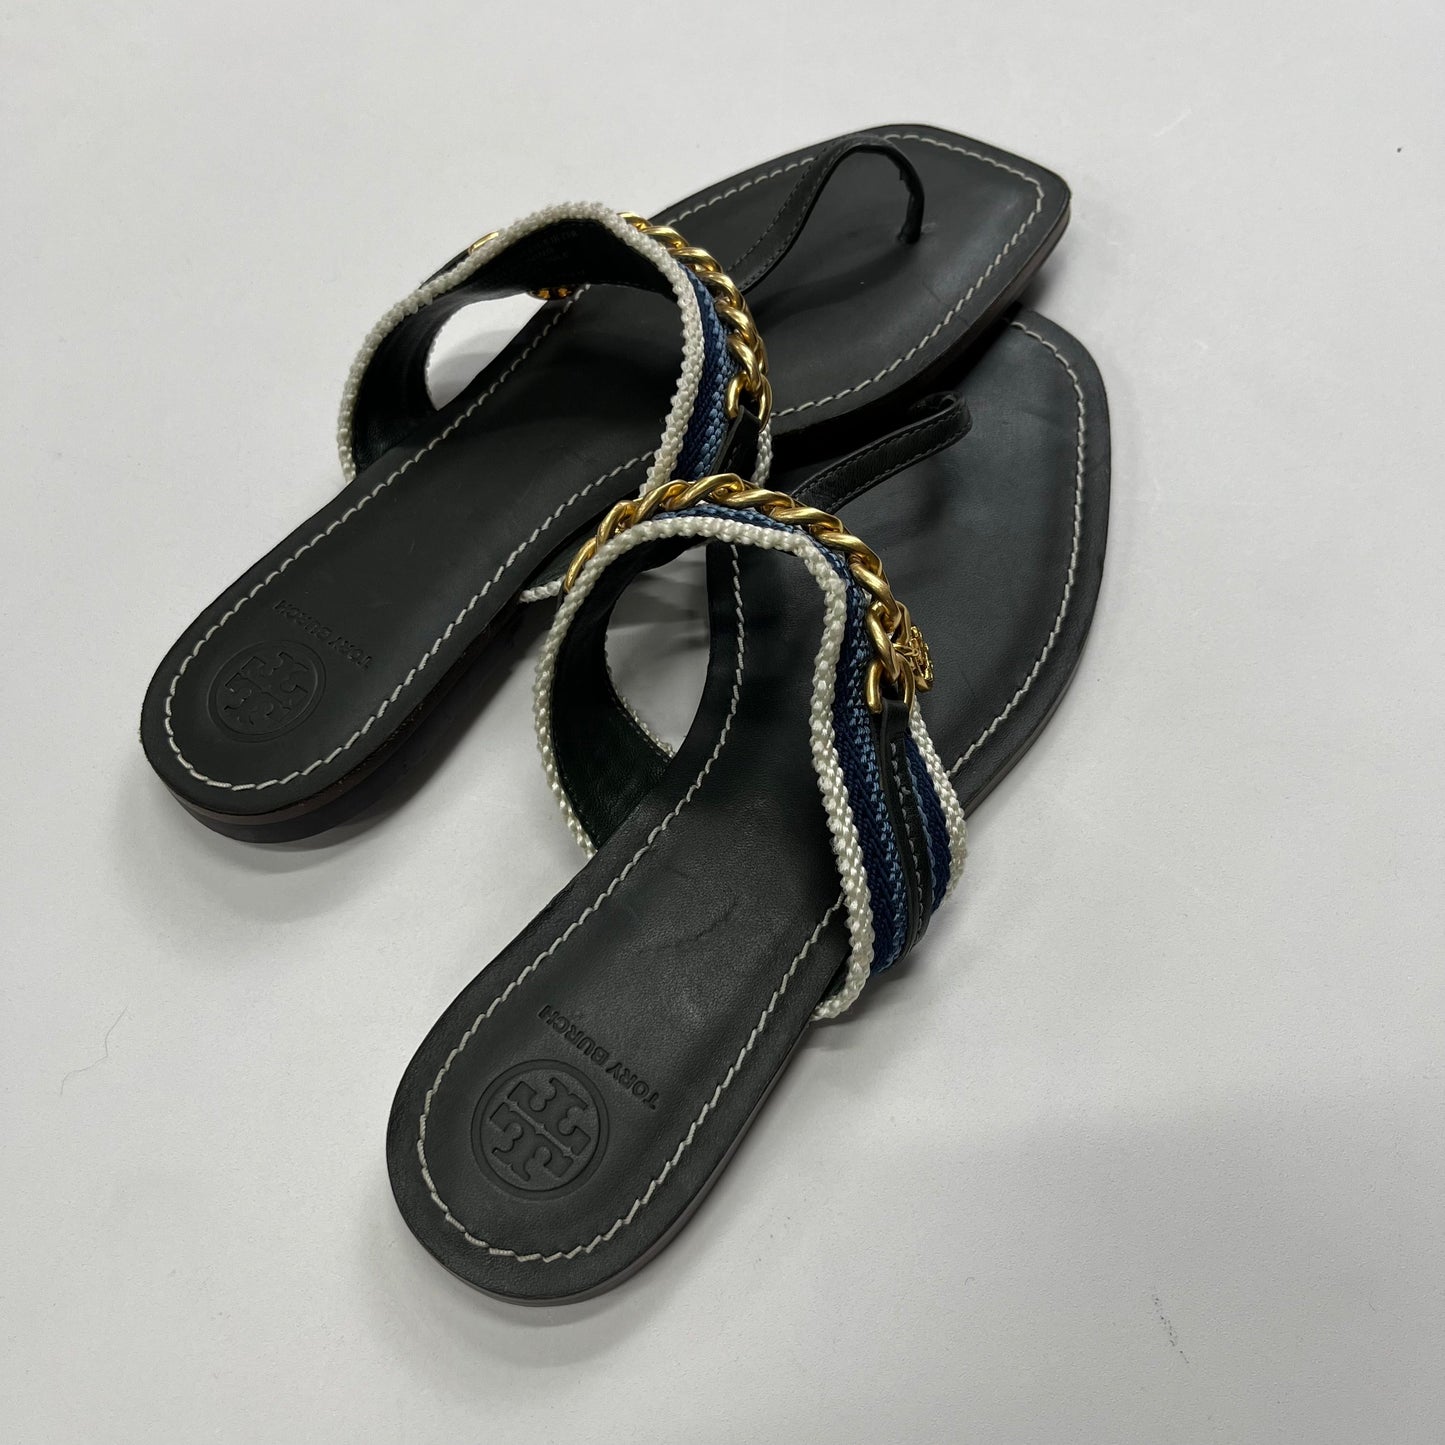 Sandals Flip Flops By Tory Burch  Size: 8